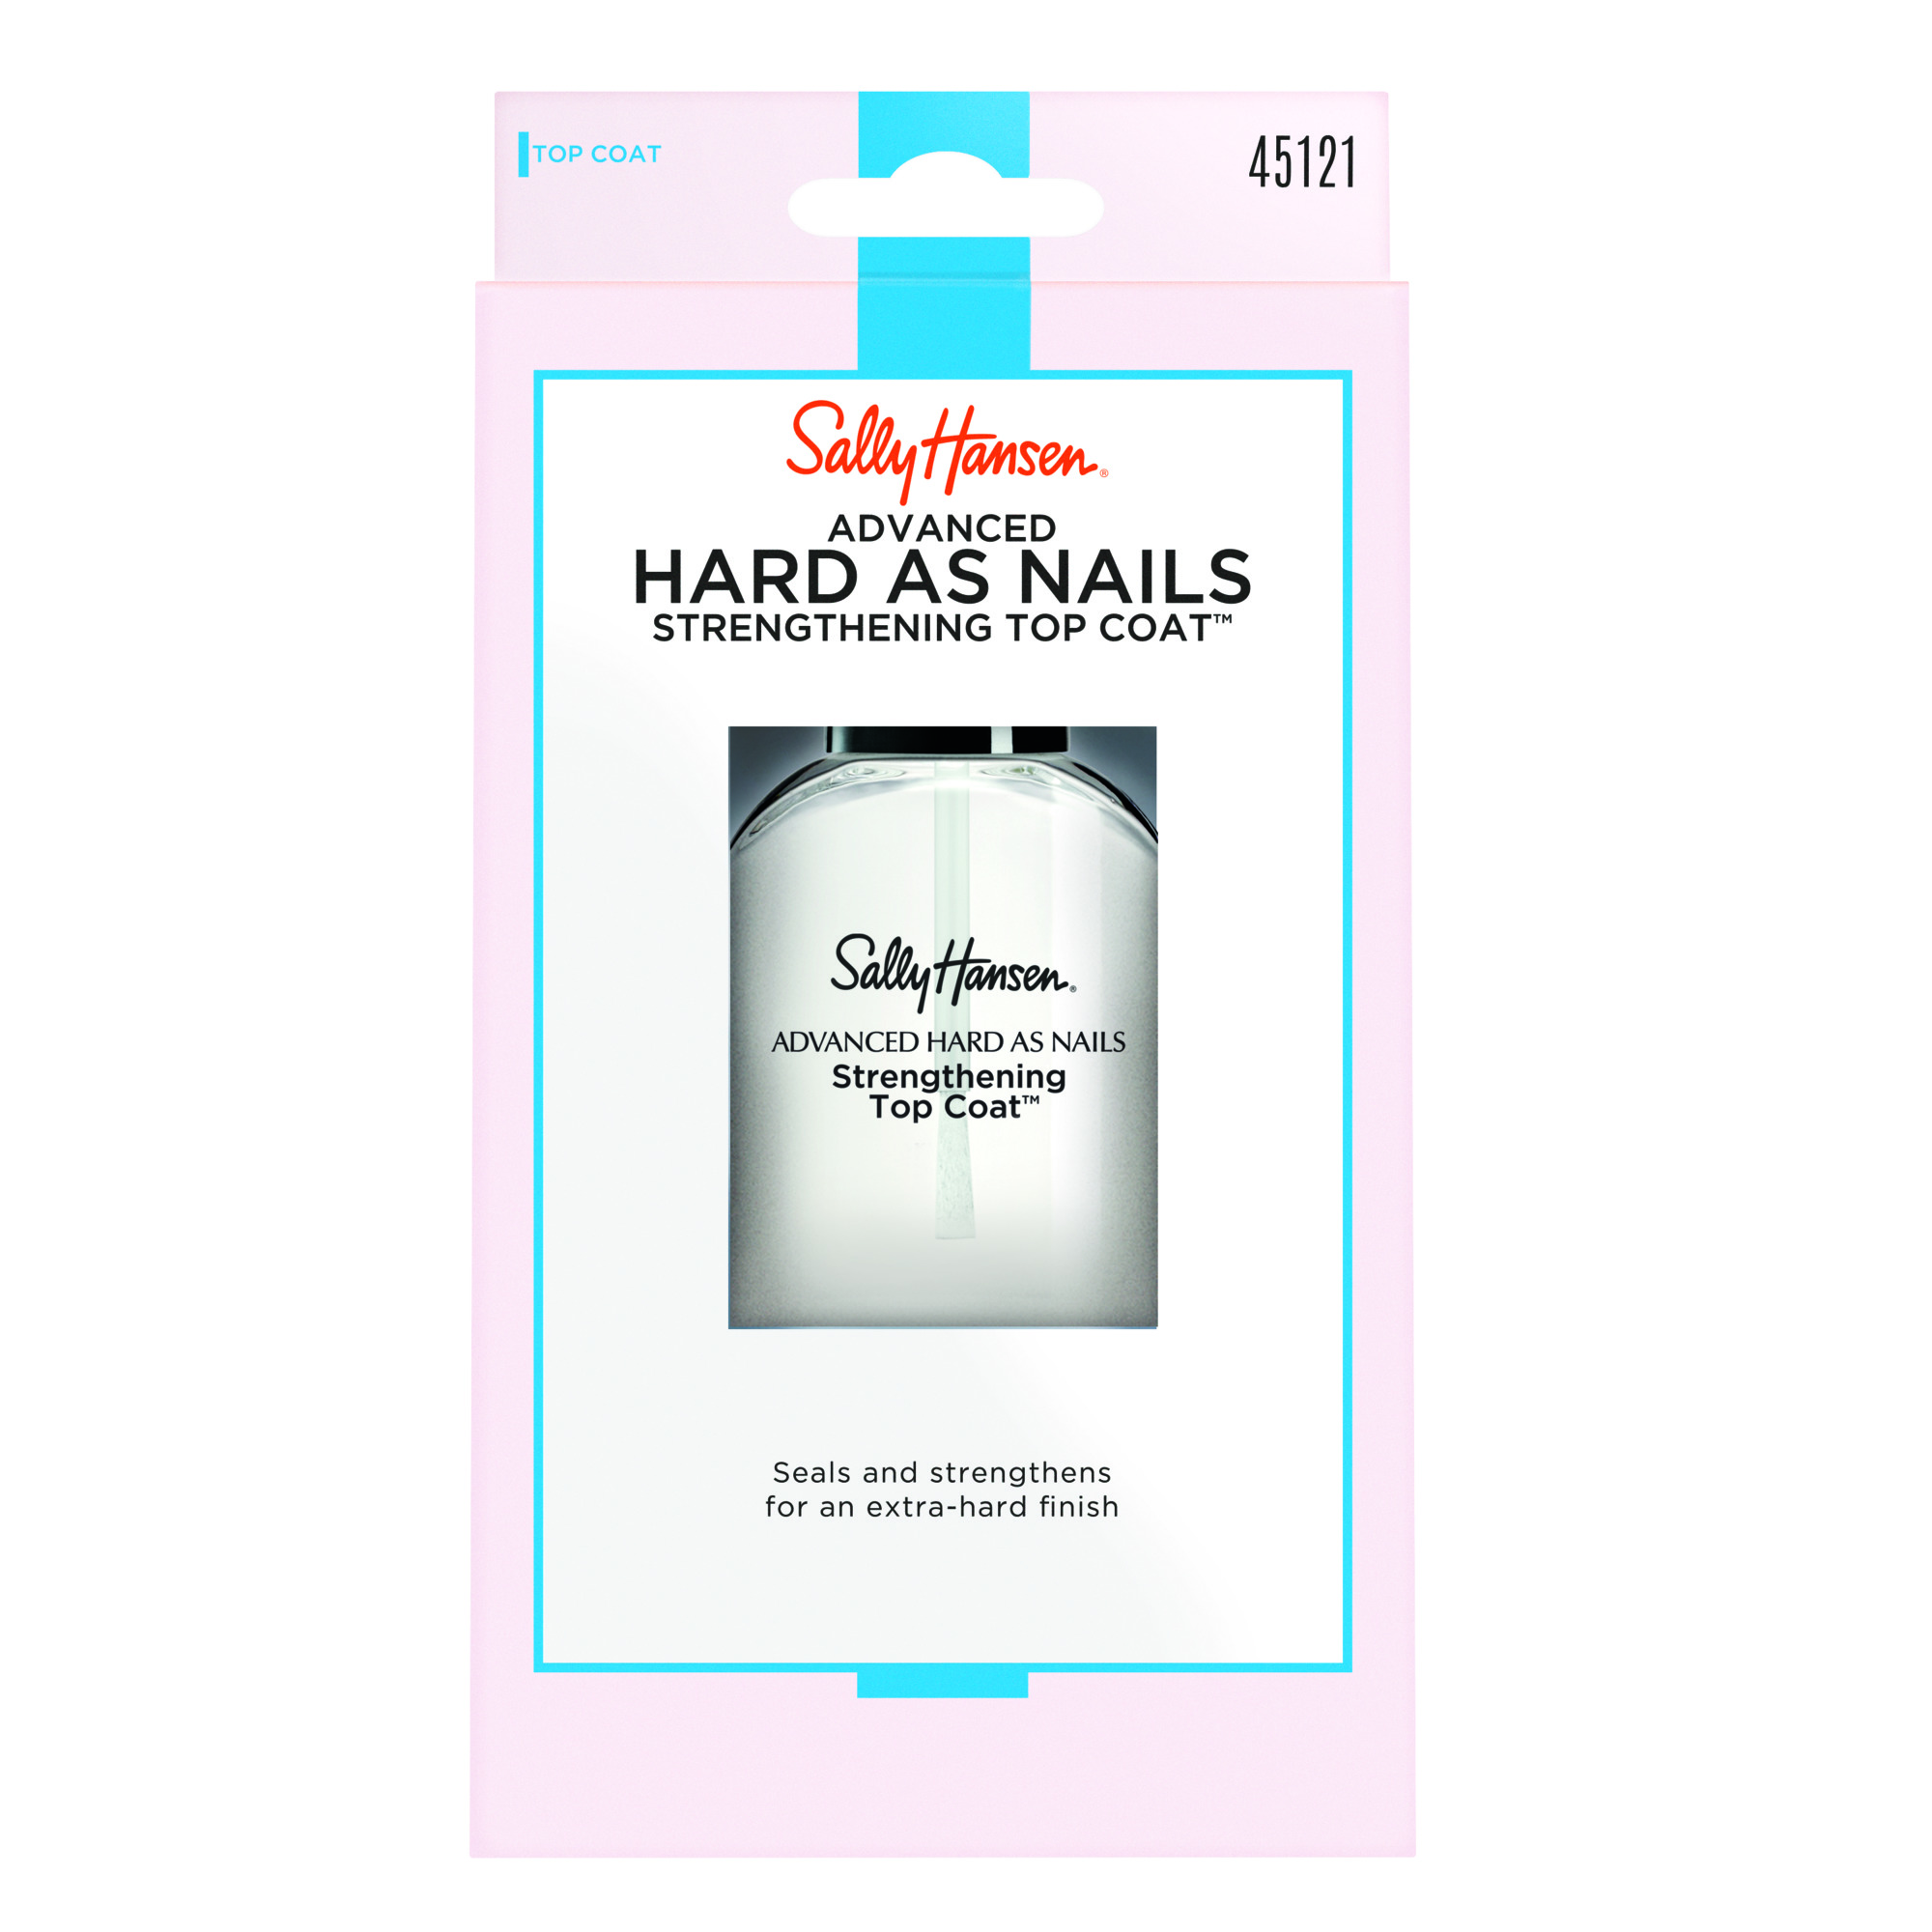 Sally Hansen Advanced Hard As Nails Strengthening Top Coat™, Hard Finish, 0.45 Oz, Top Coat Nail Polish, Top Coat Nails, Nail Strengthener, Nail Hardener, Top Coat for Nails, Nail Treatment - image 2 of 3